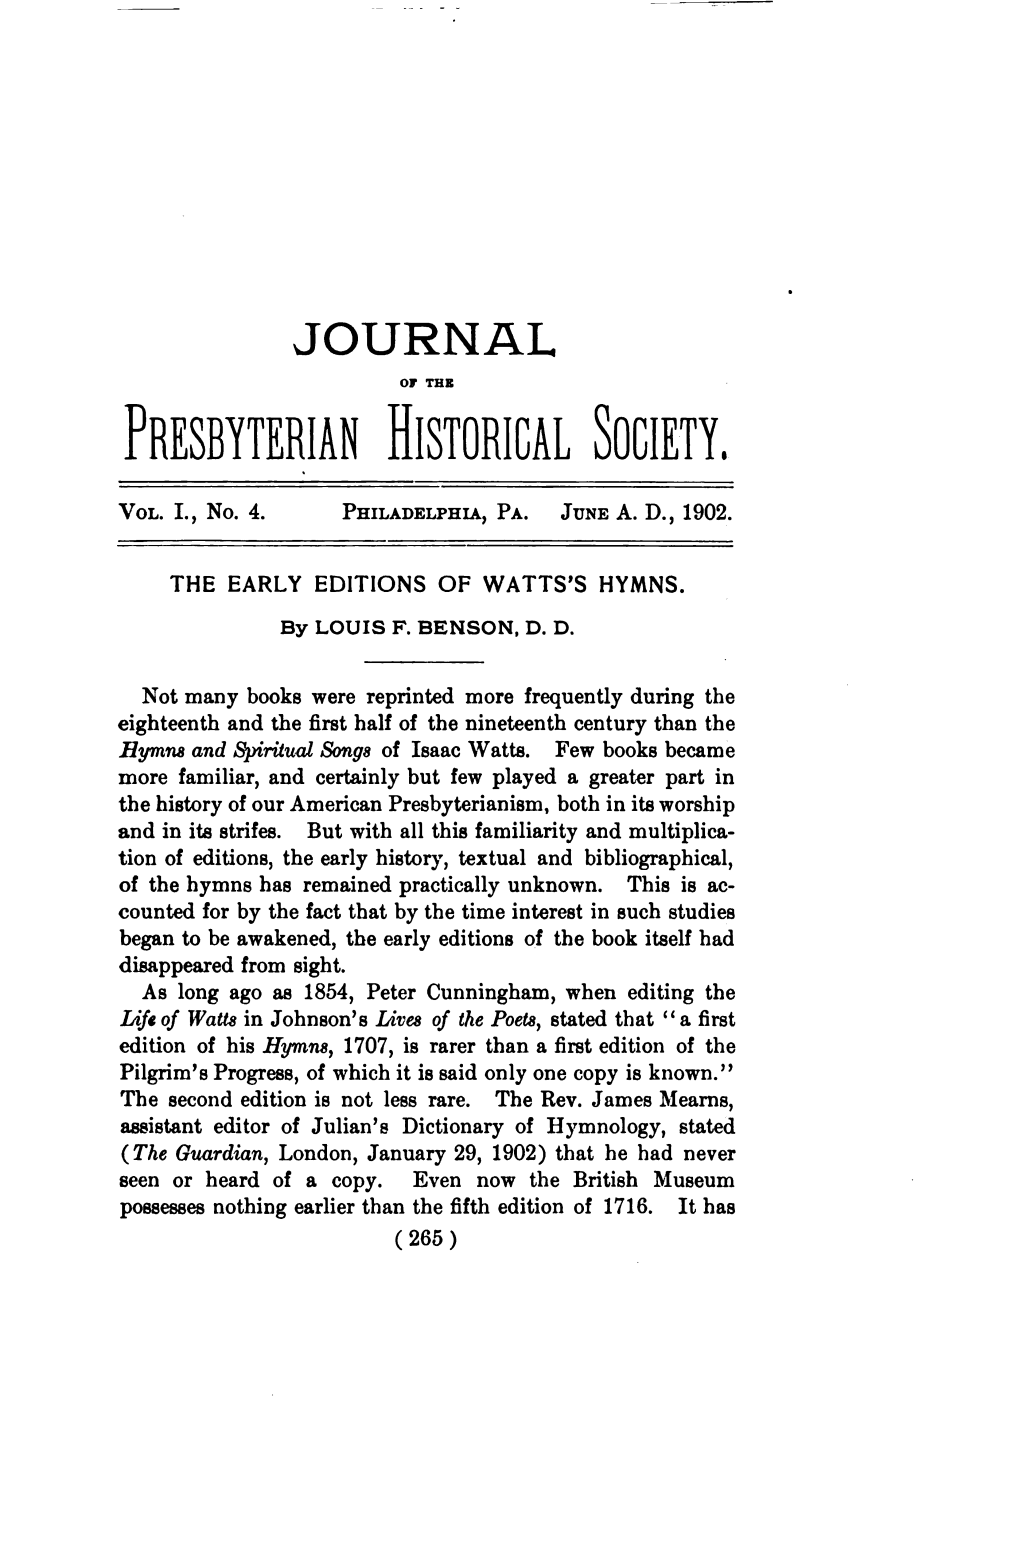 Journal of the Presbyterian Historical Society